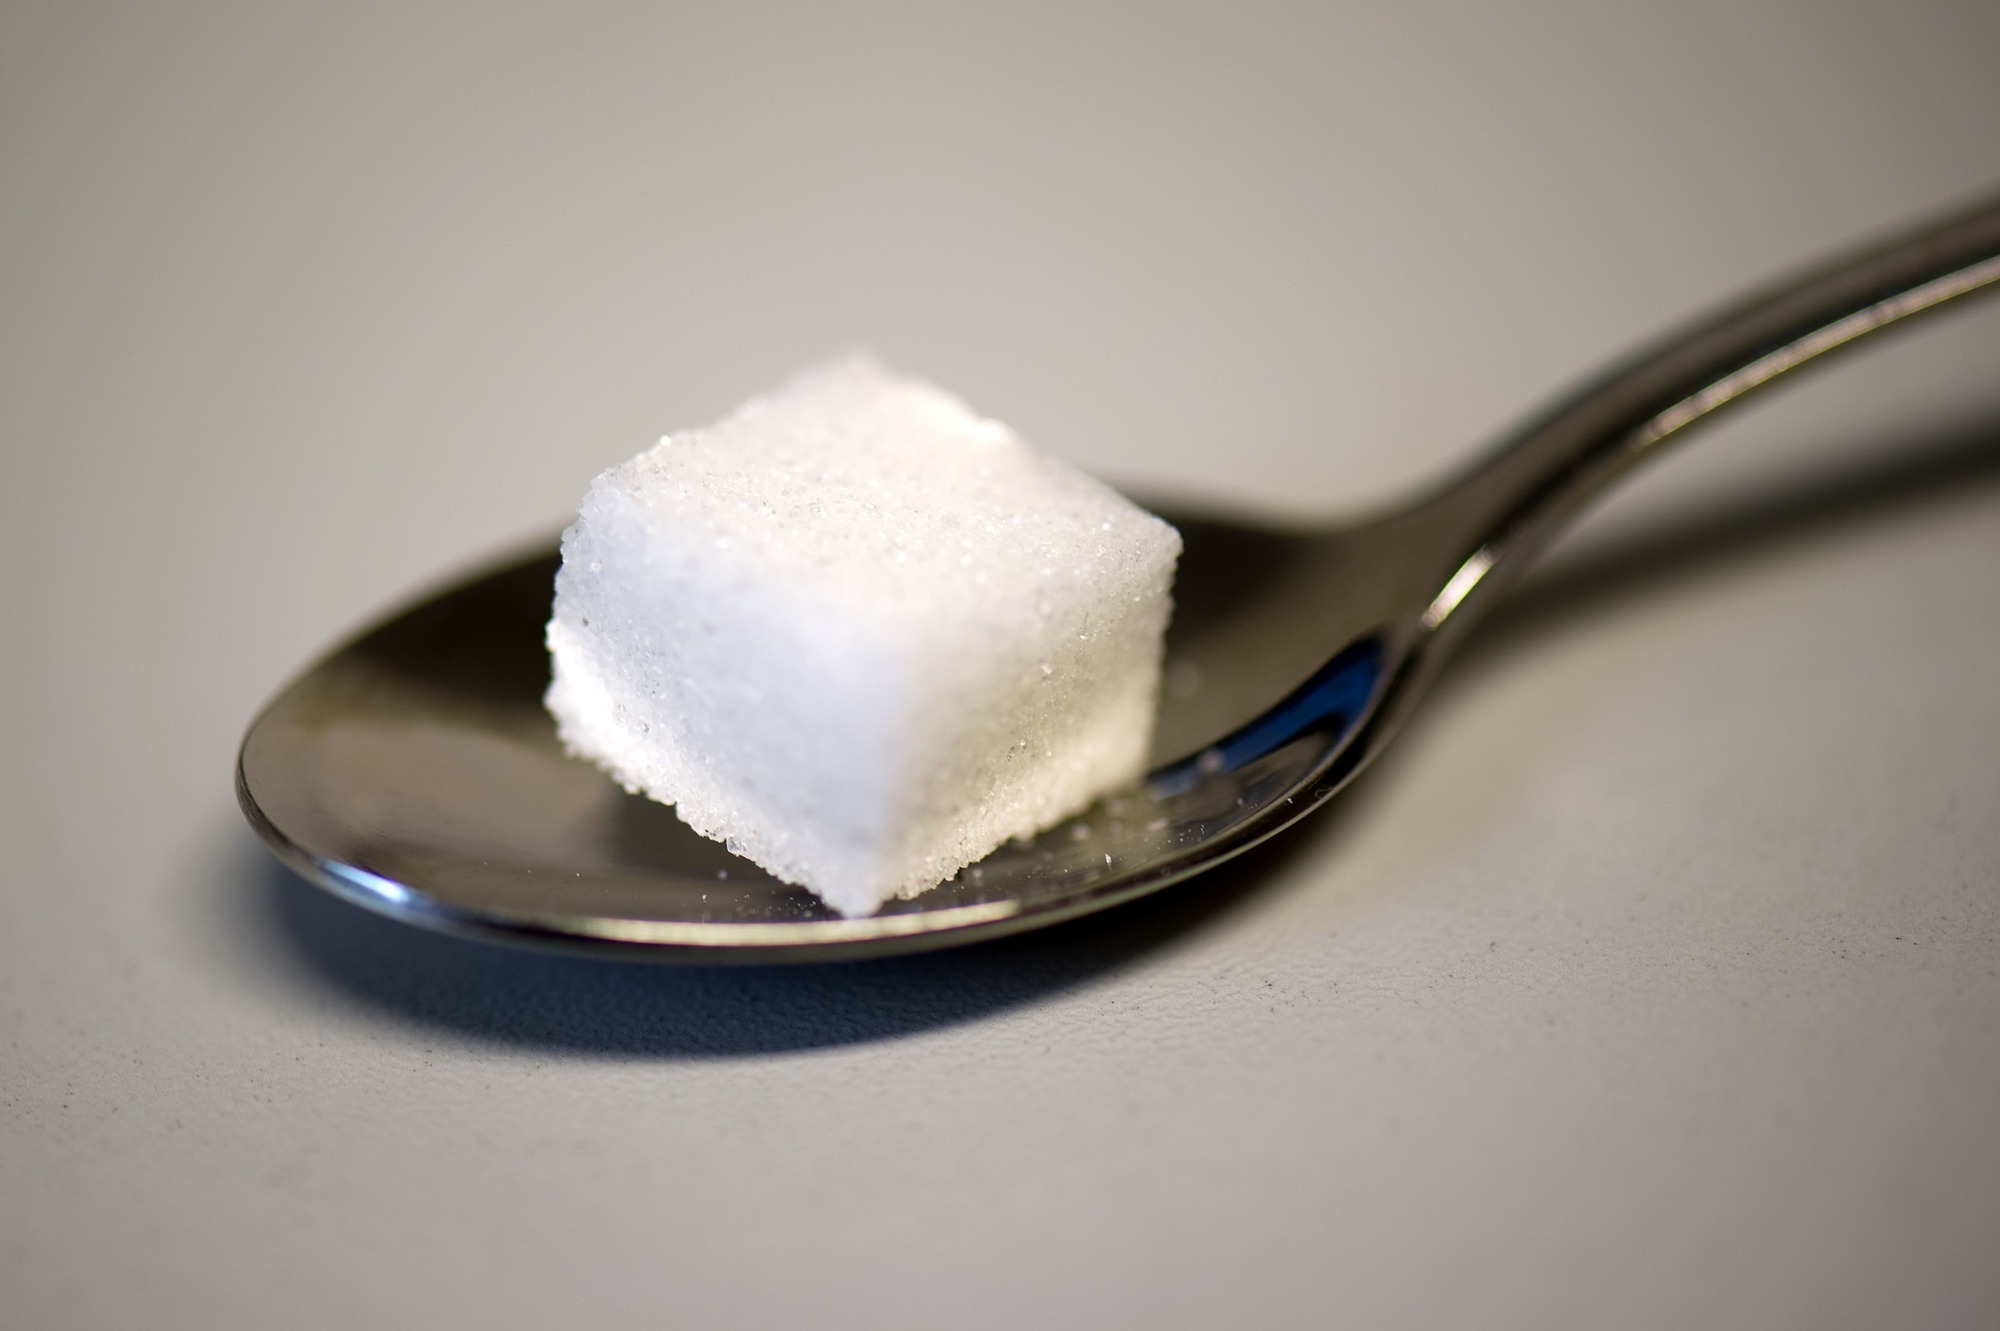 A b of sugar. Сахар рафинад 1 кусочек. Сахар кусочками. Кусочек сахара рафинада. Природный сахар.